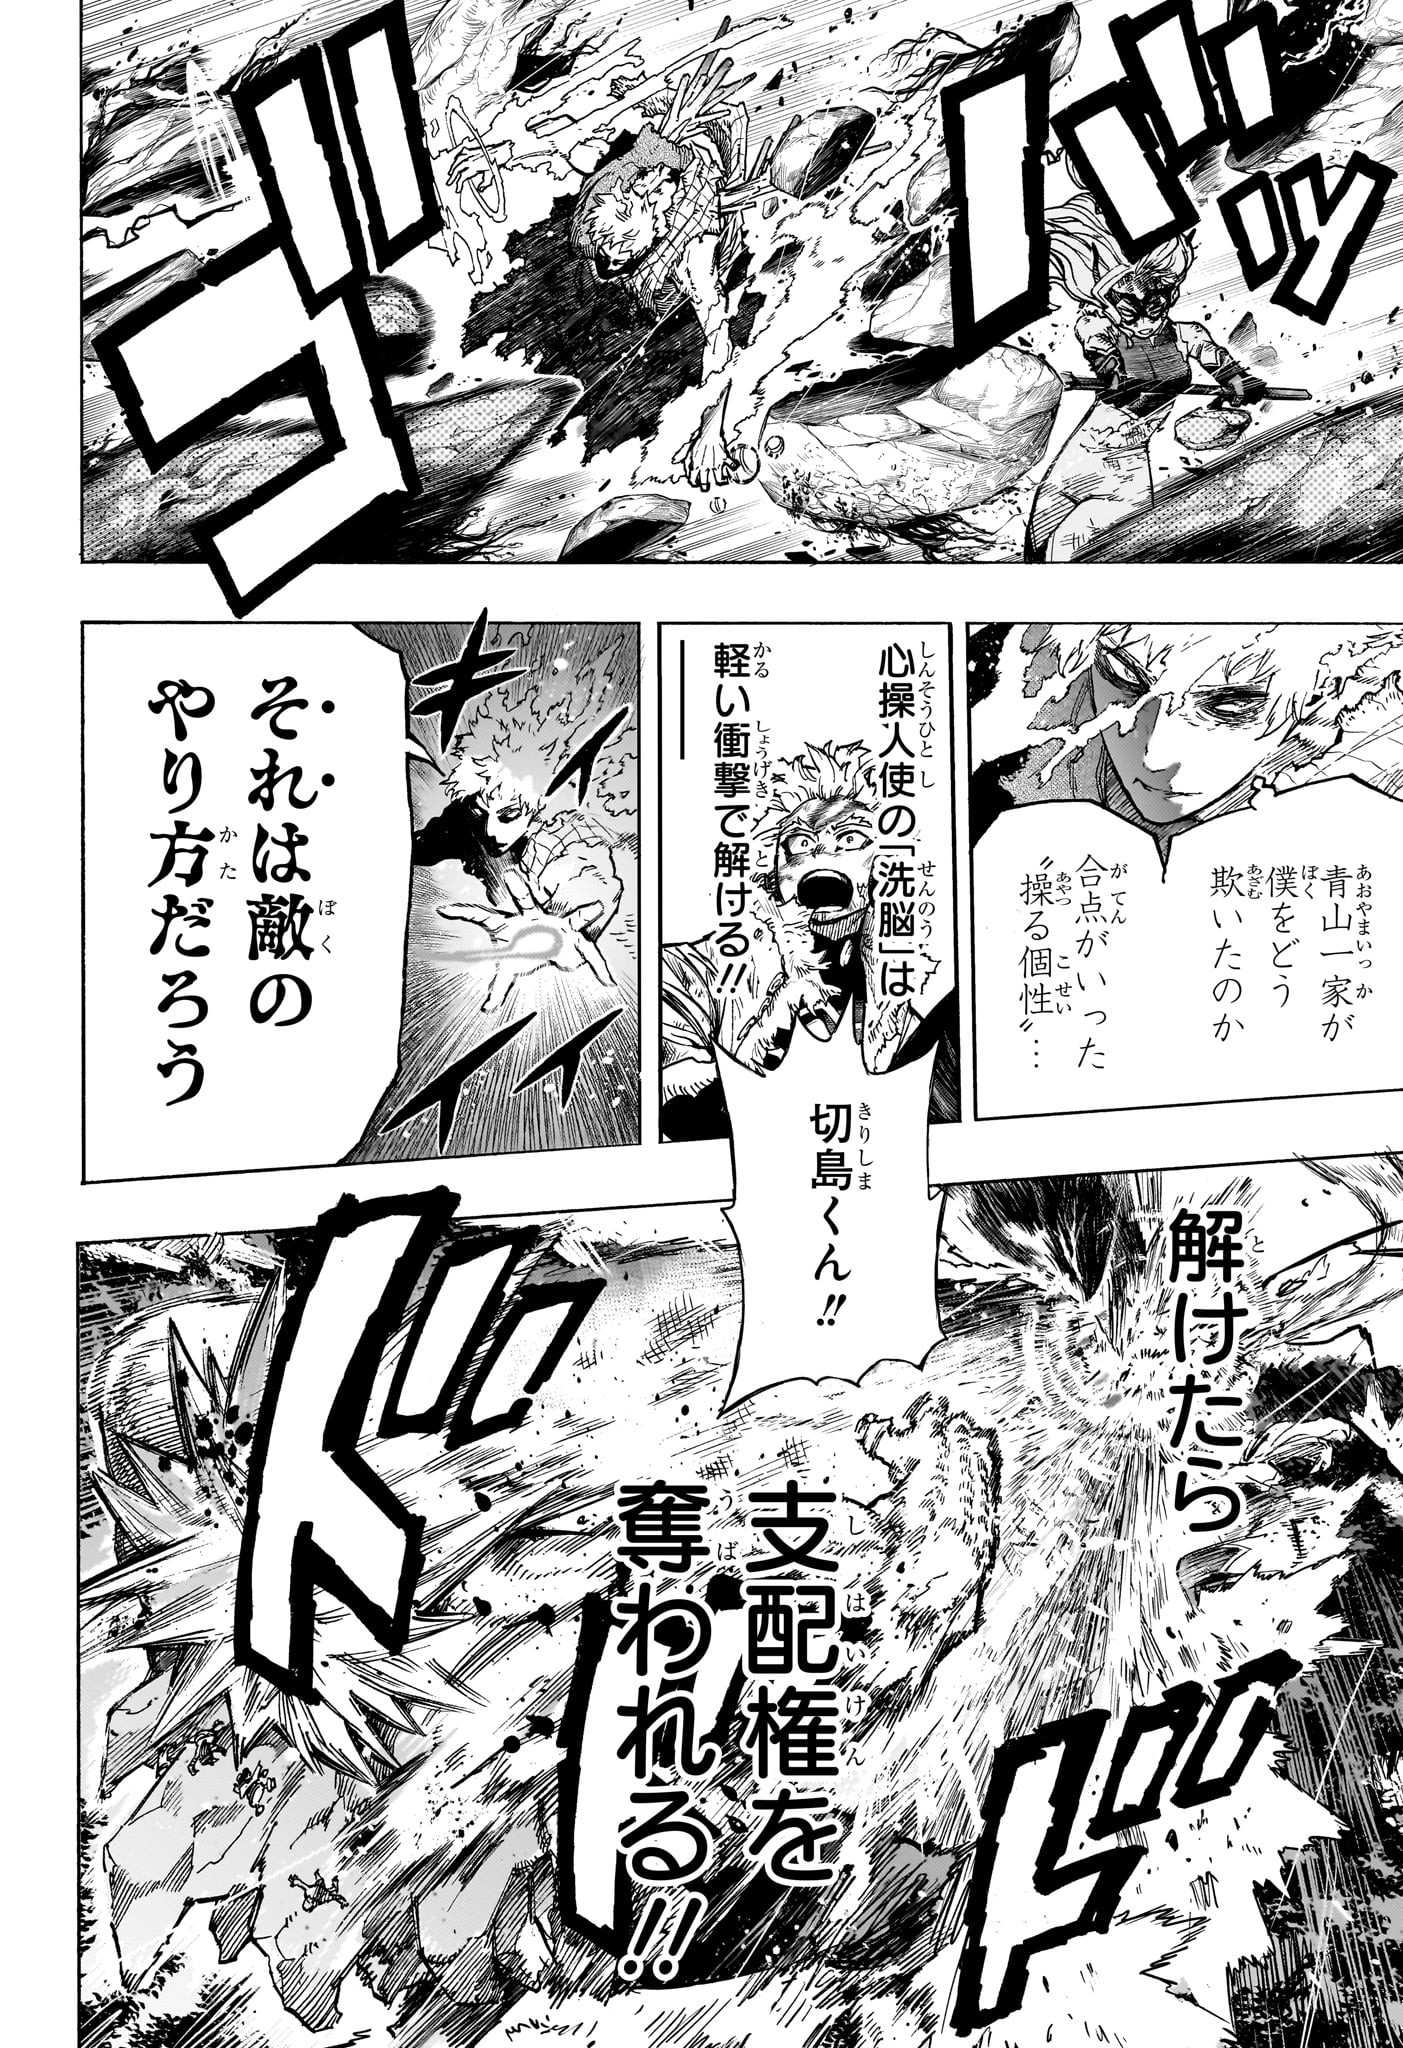 Boku no Hero Academia - Chapter 384 - Page 2